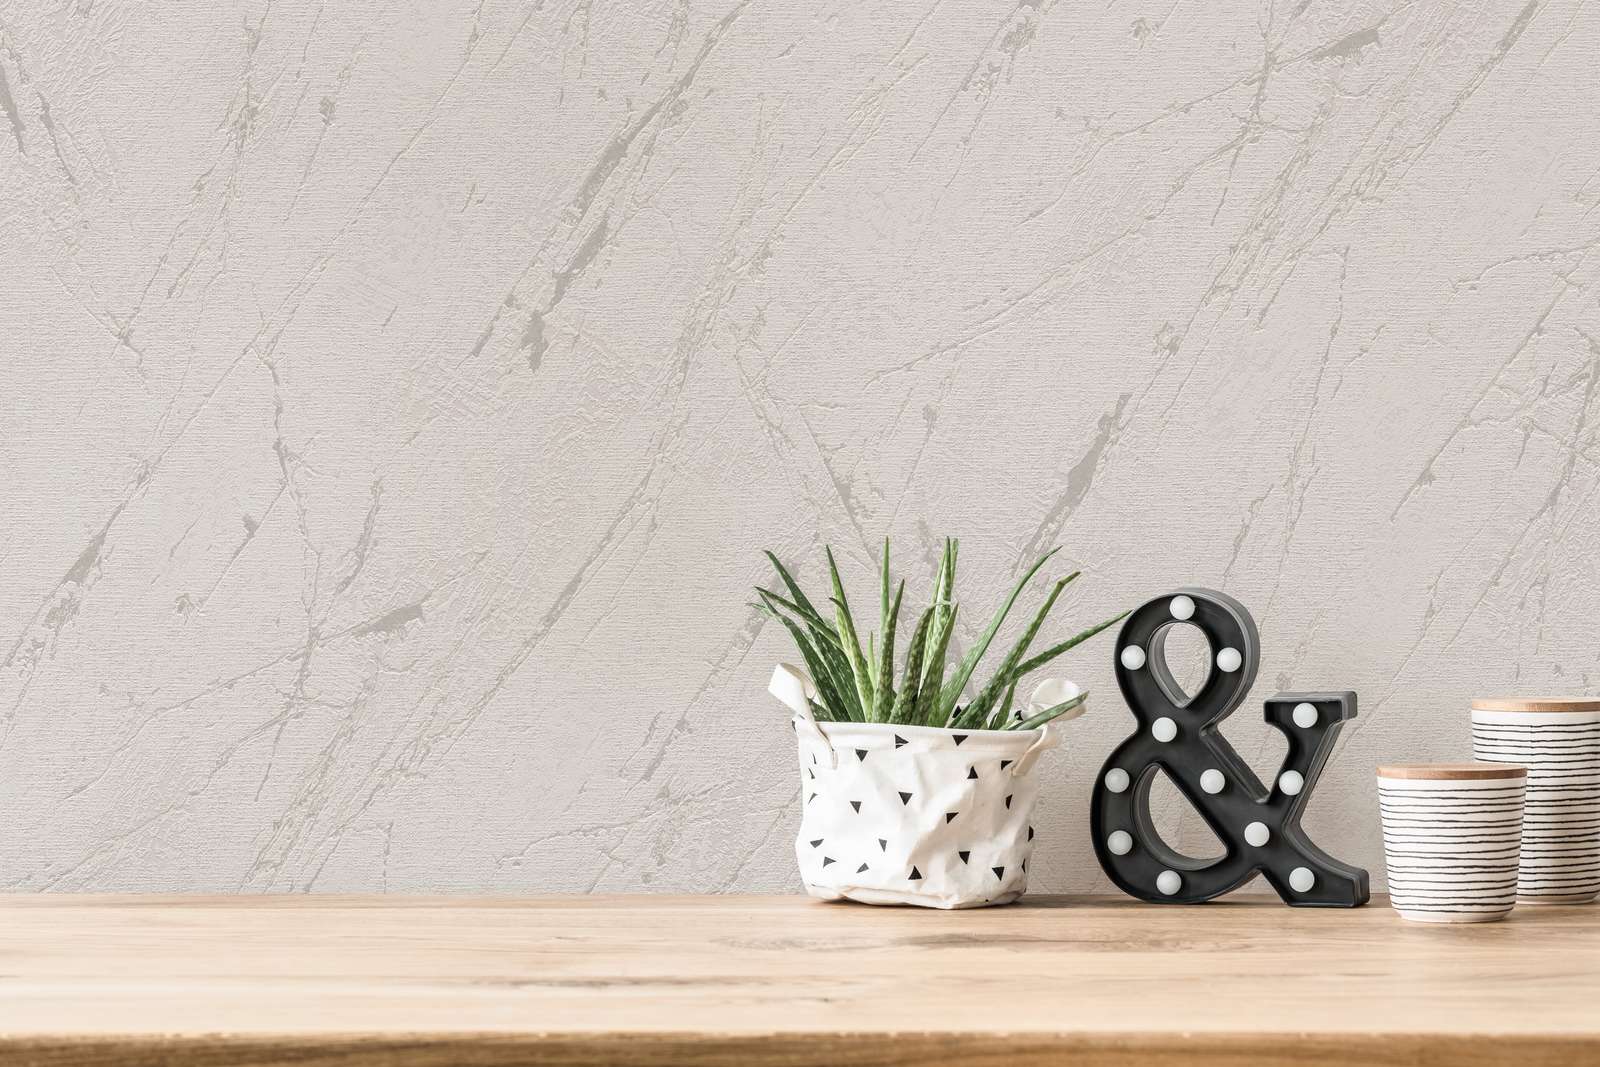             Non-woven wallpaper in plaster look with metallic effect - grey, silver, metallic
        